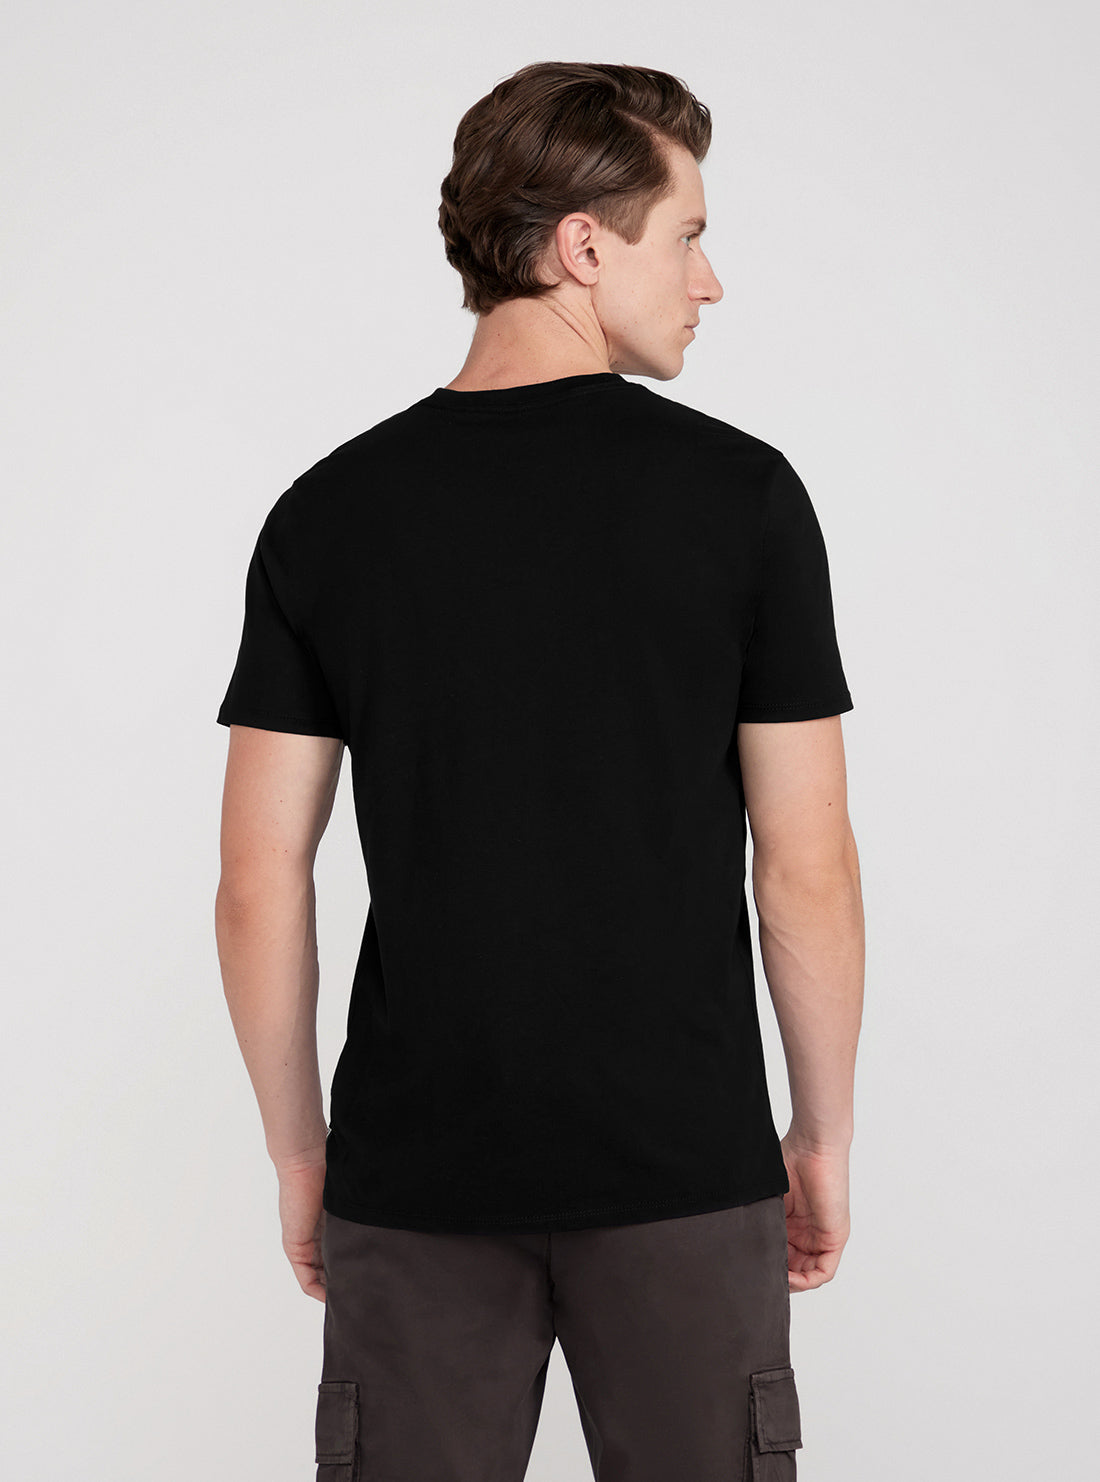 GUESS Black Moon Print Short Sleeve T-Shirt back view